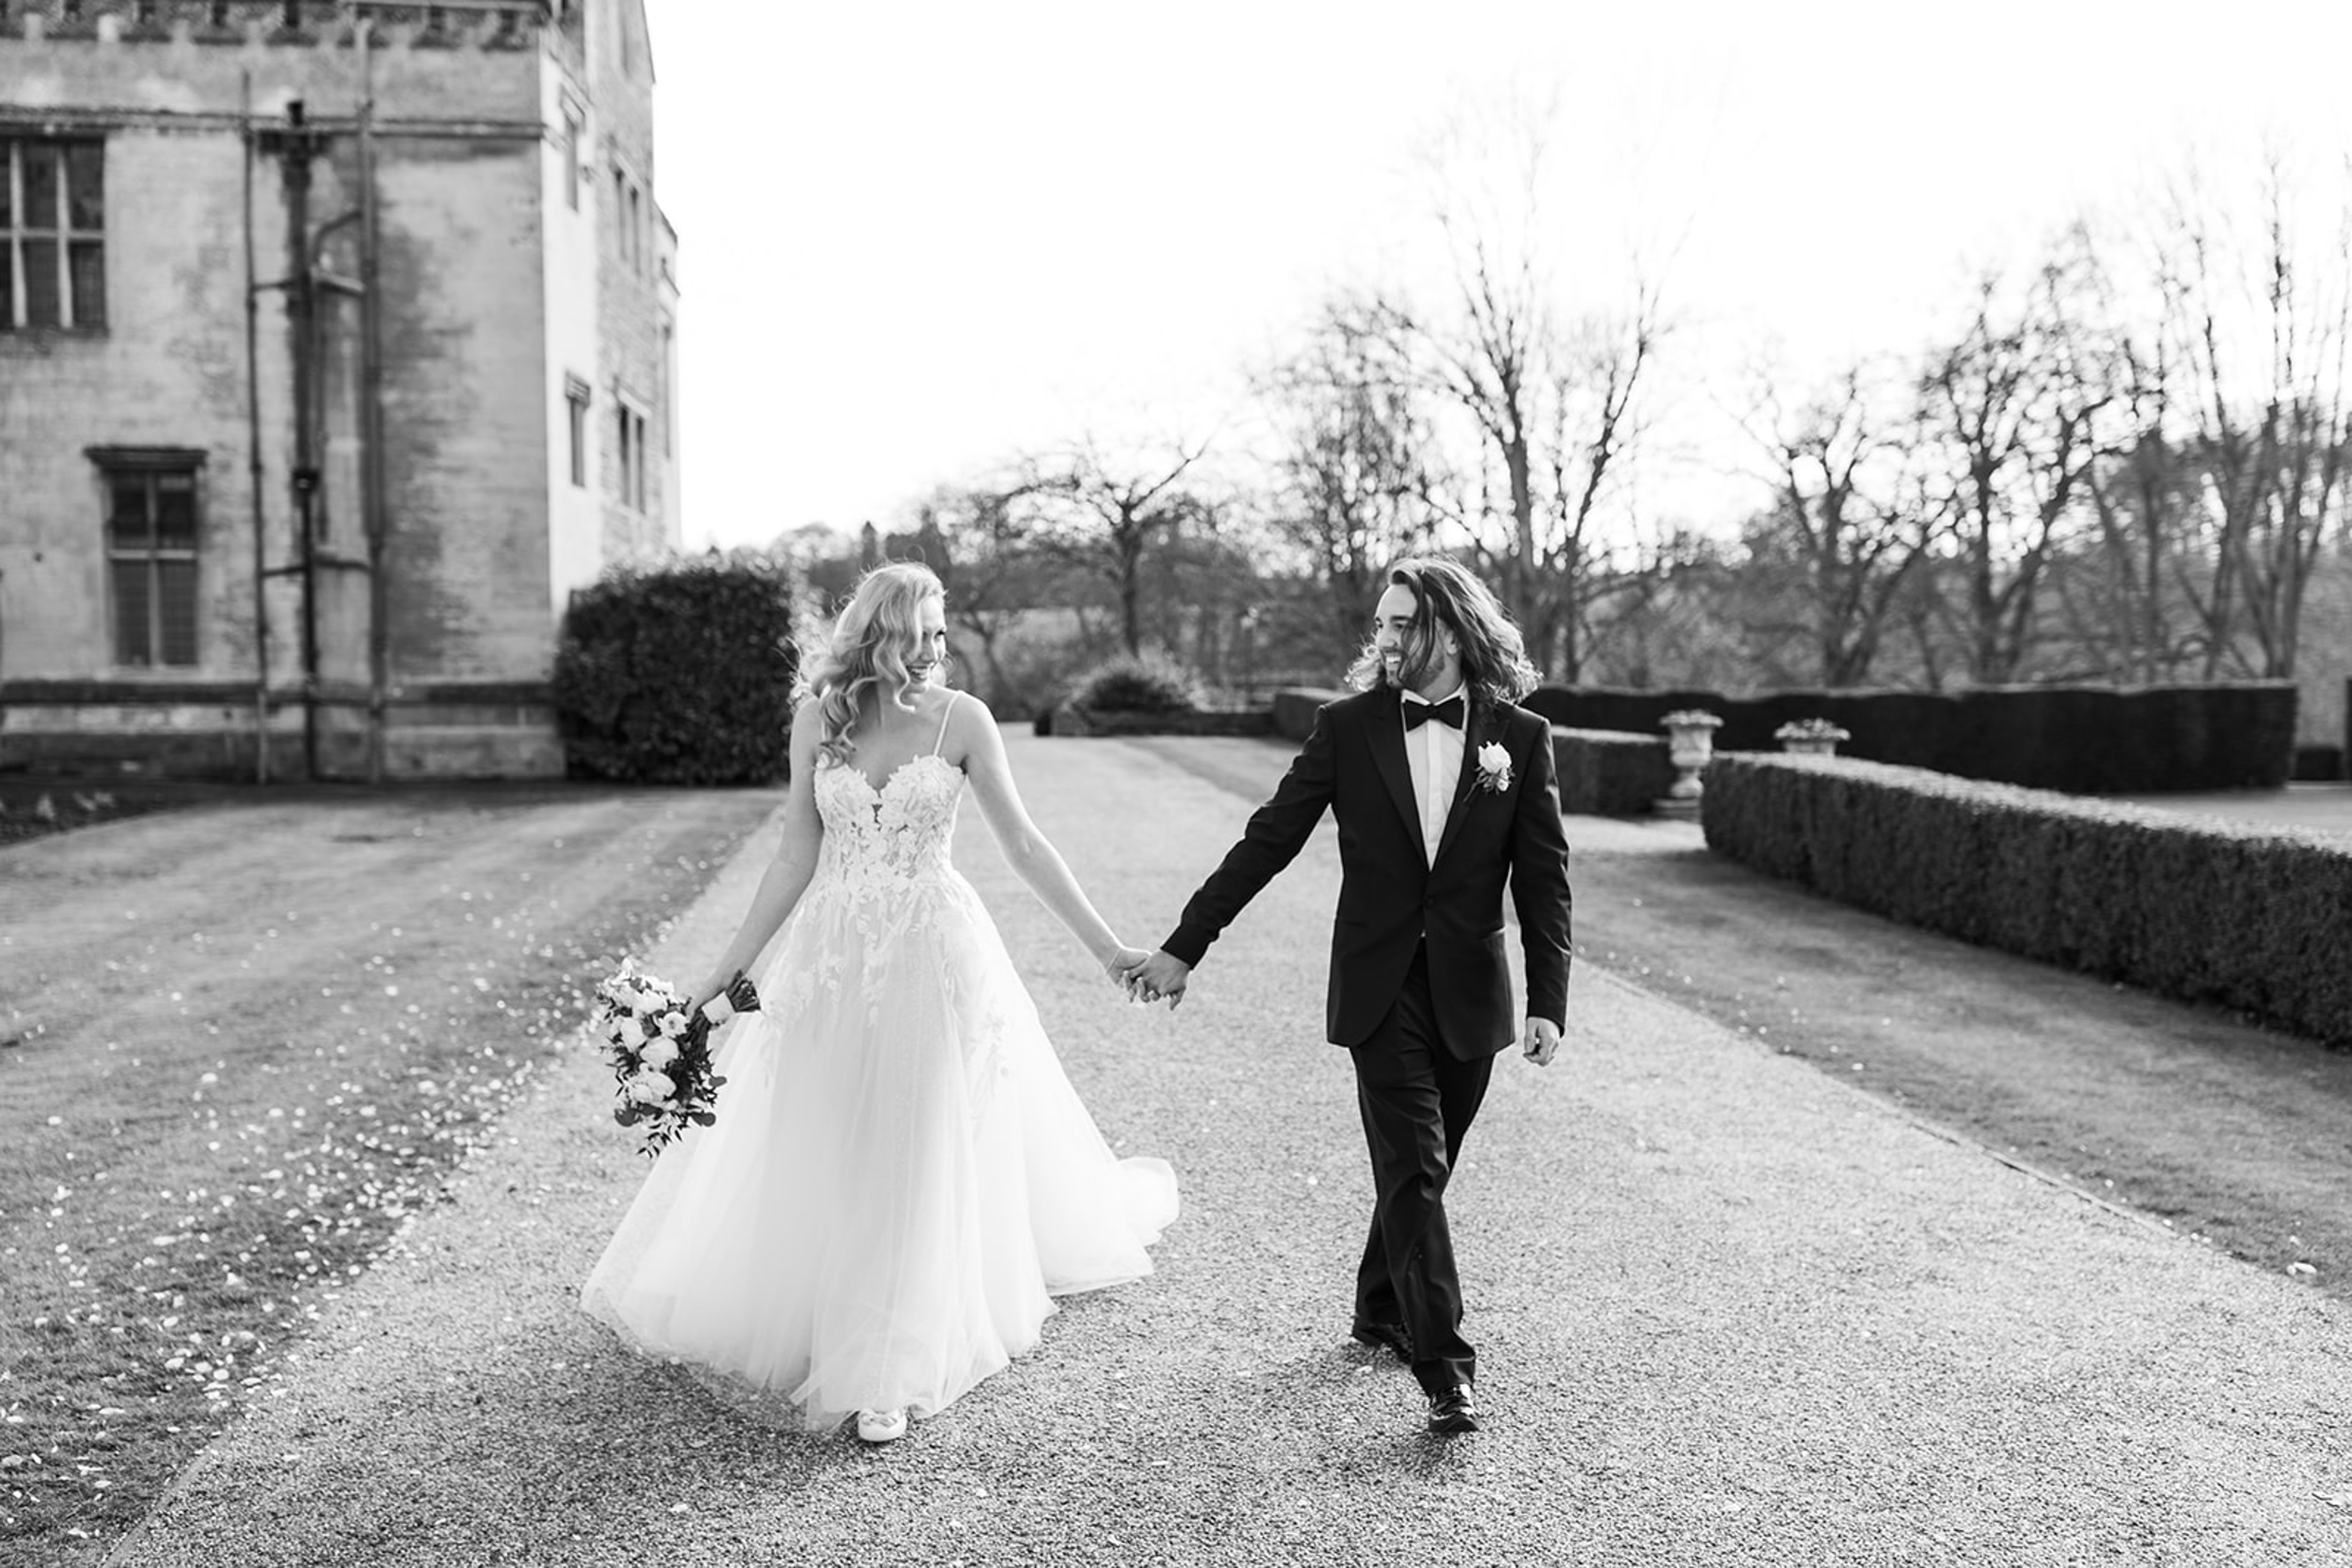 Black Tie Editorial Wedding at Rushton Hall. Romantic, Documentary Wedding Photos by Aimee Joy Photography.